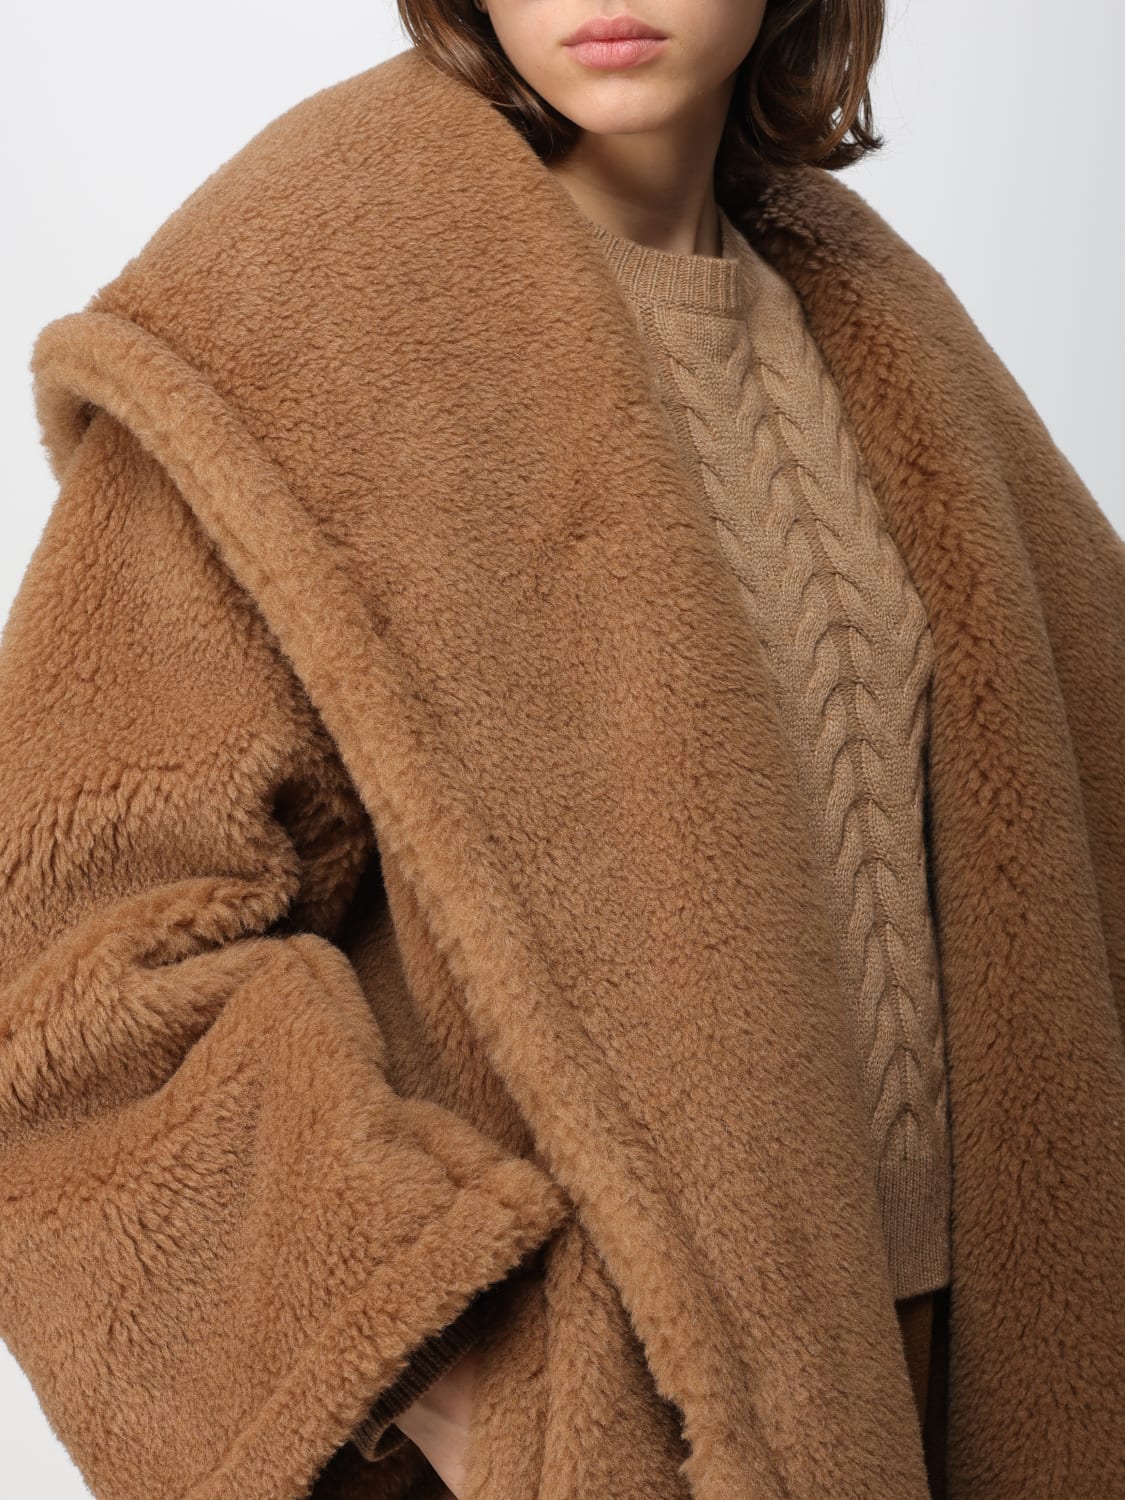 Abrigos para hombre - Abrigos de lana y sobretodos de vestir en lana de  camello